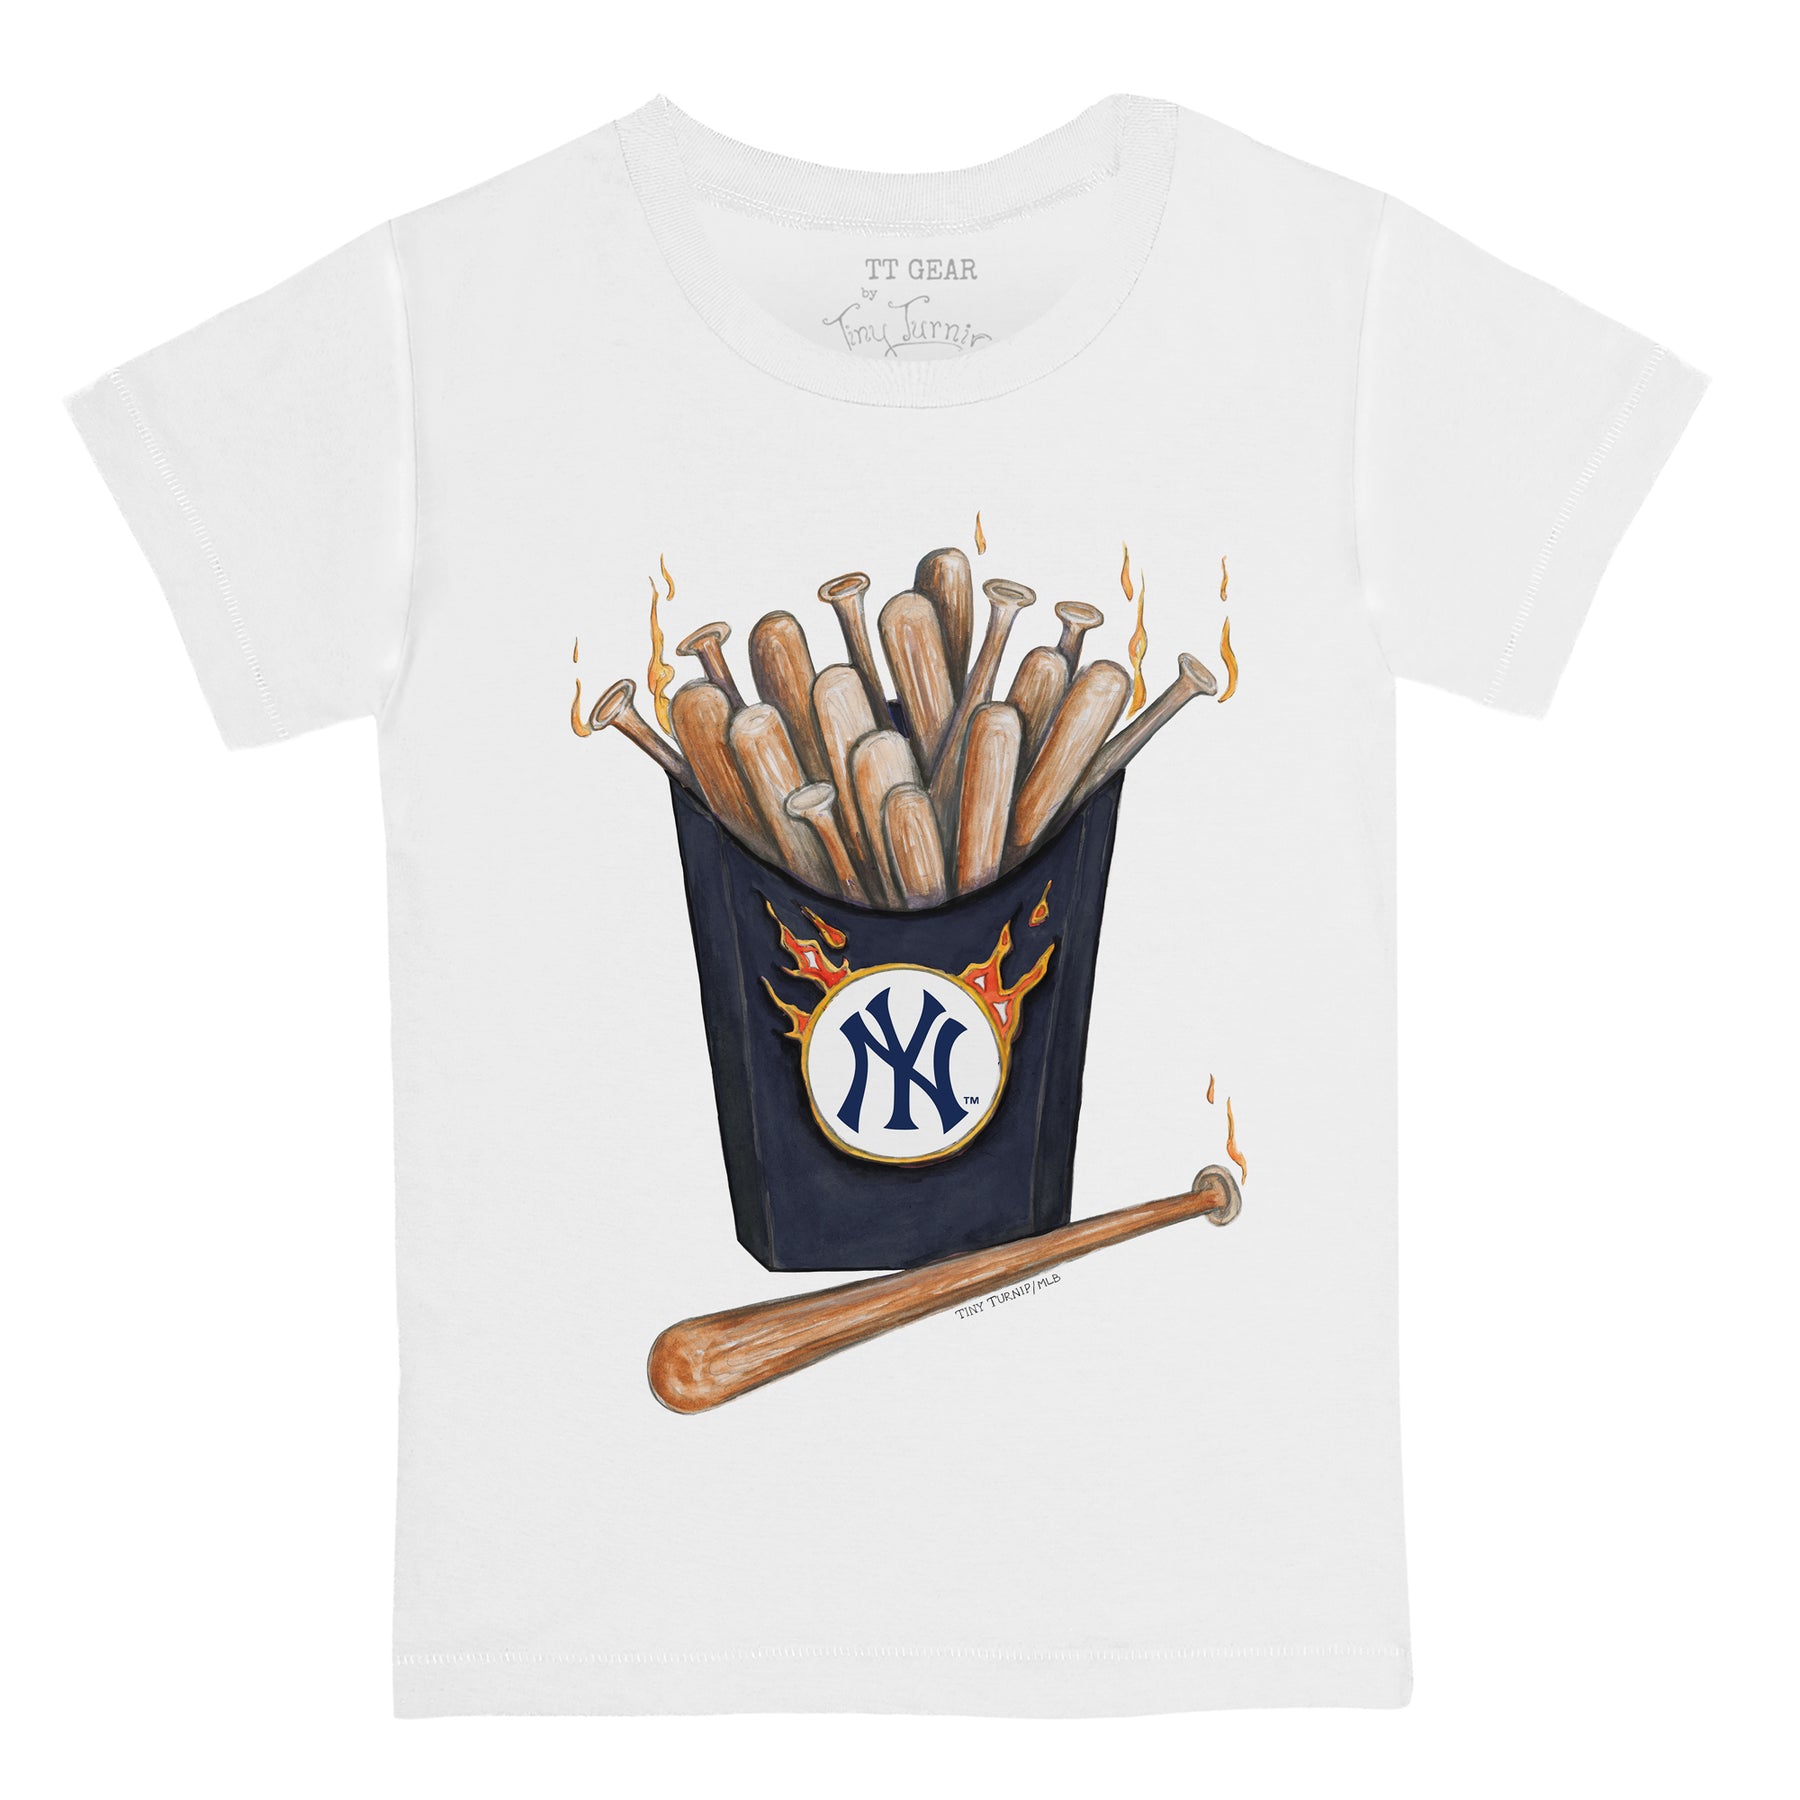 New York Yankees Hot Bats Tee Shirt